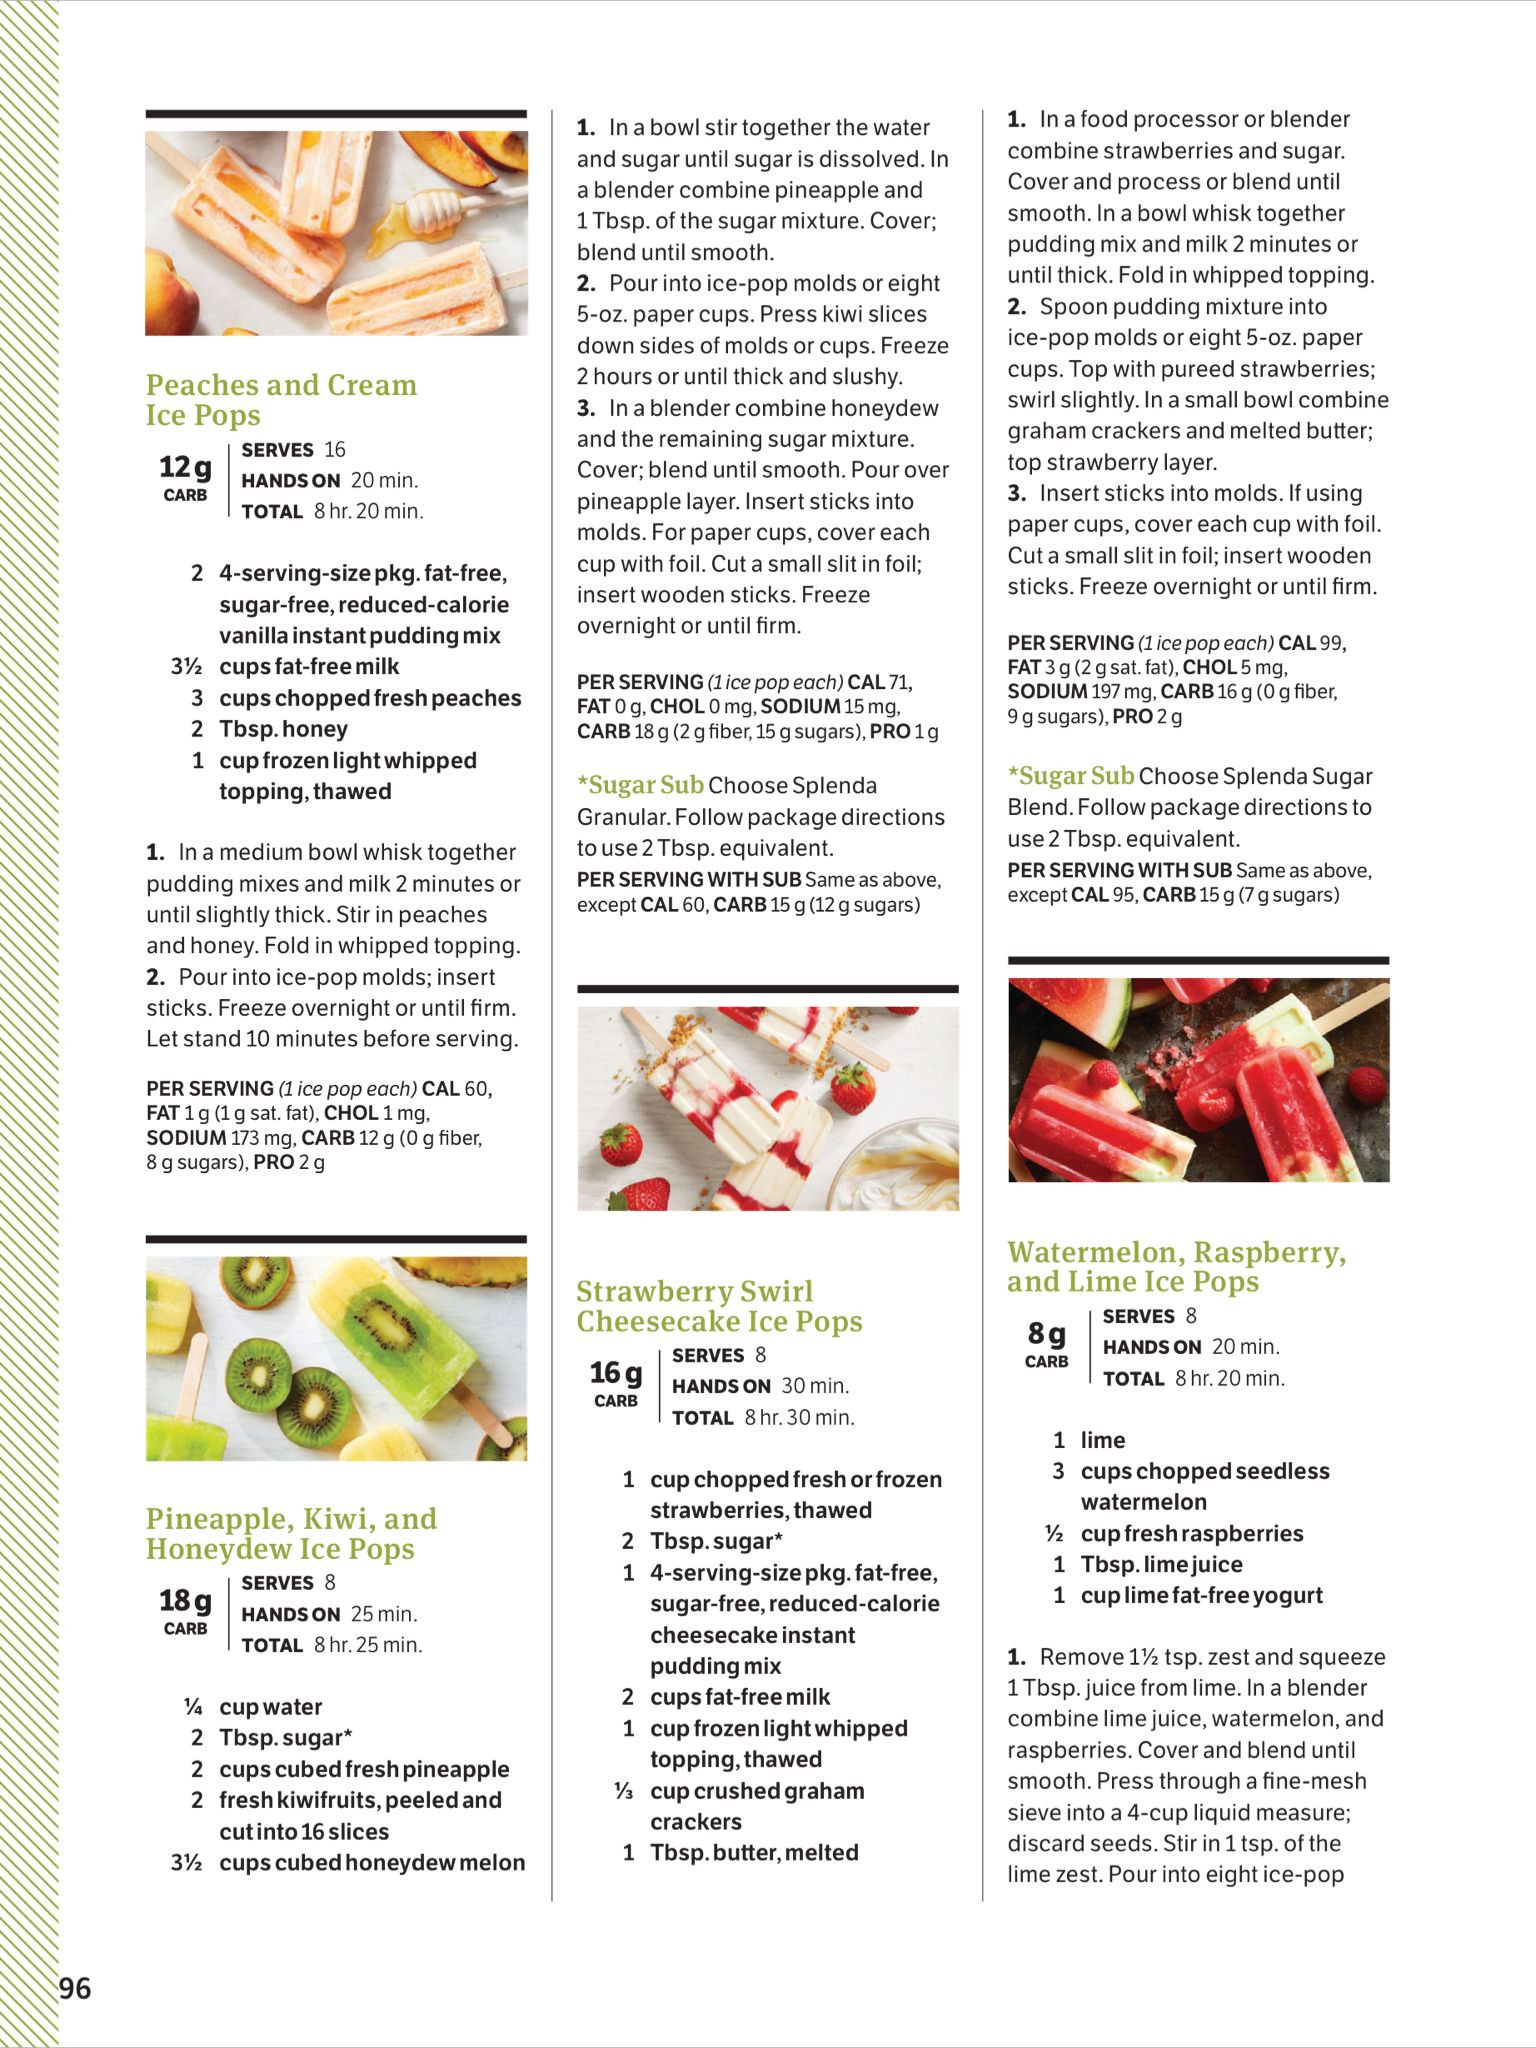 Diabetic Living Magazine Recipes
 "Diabetic Living Summer Recipes" from Diabetic Living